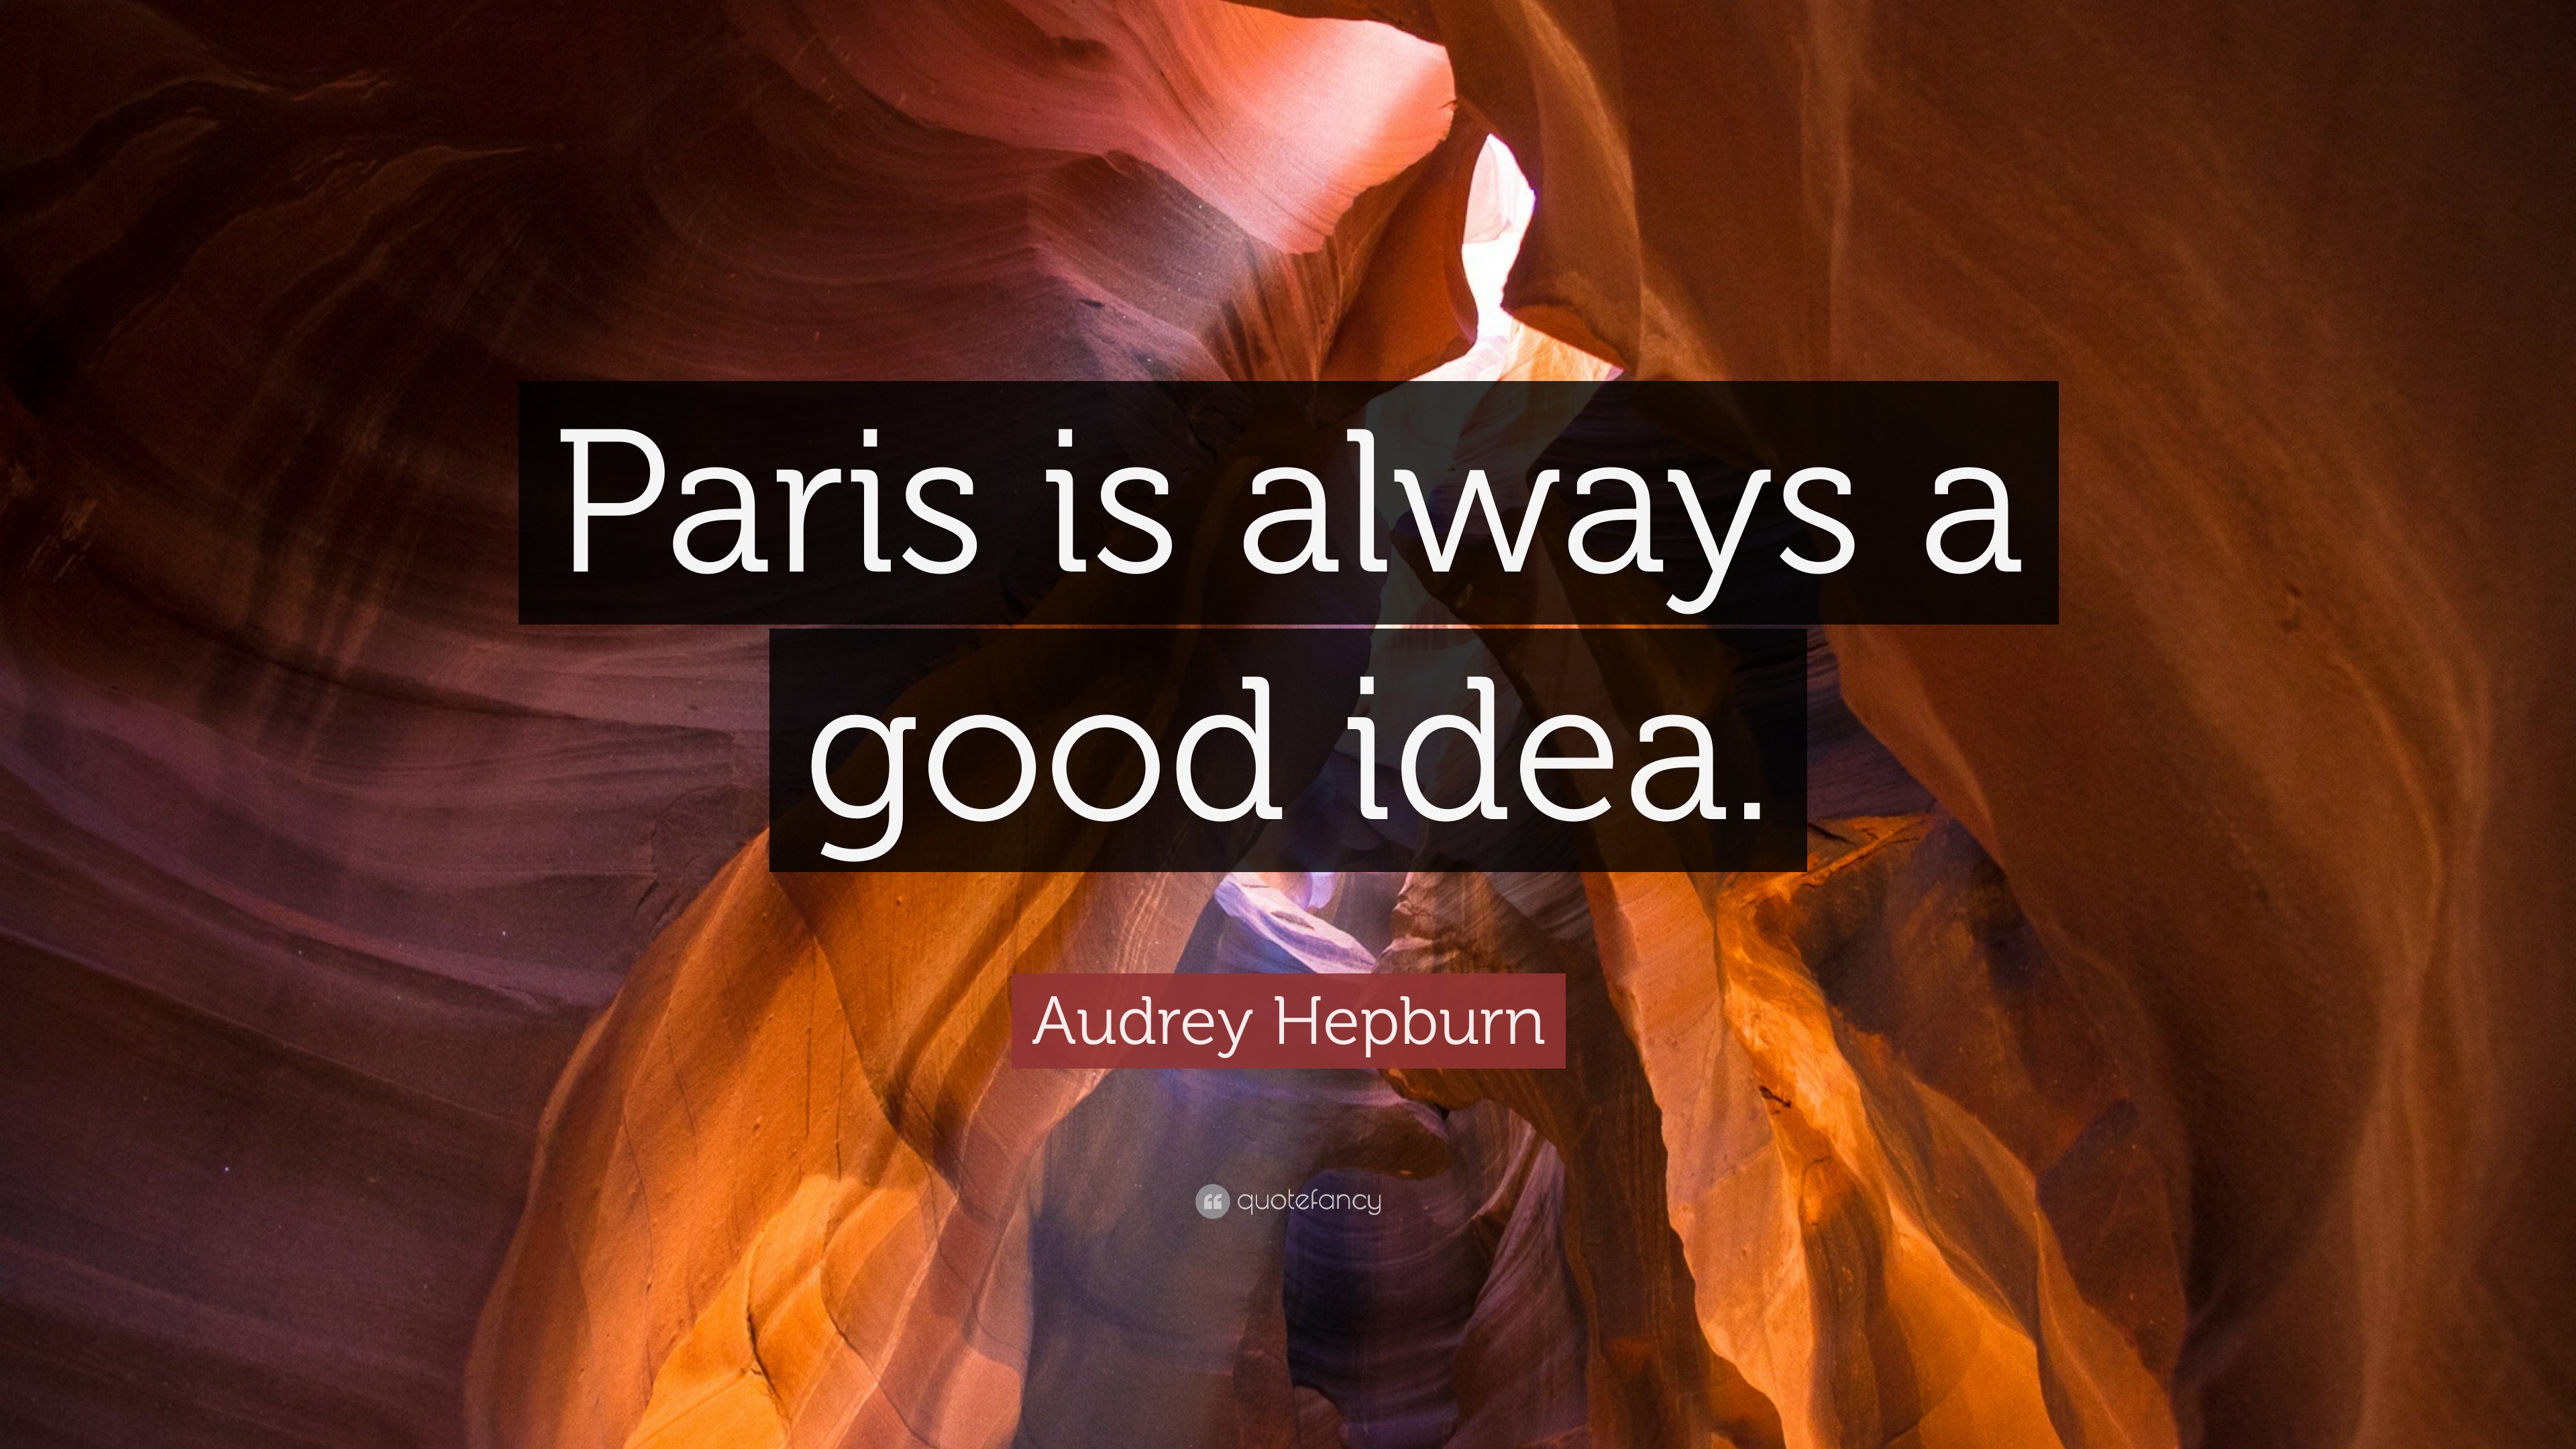 طاولات تلفزيون Audrey Hepburn Quote: “Paris is always a good idea.” coque iphone xs Audrey Hepburn Paris Quotes